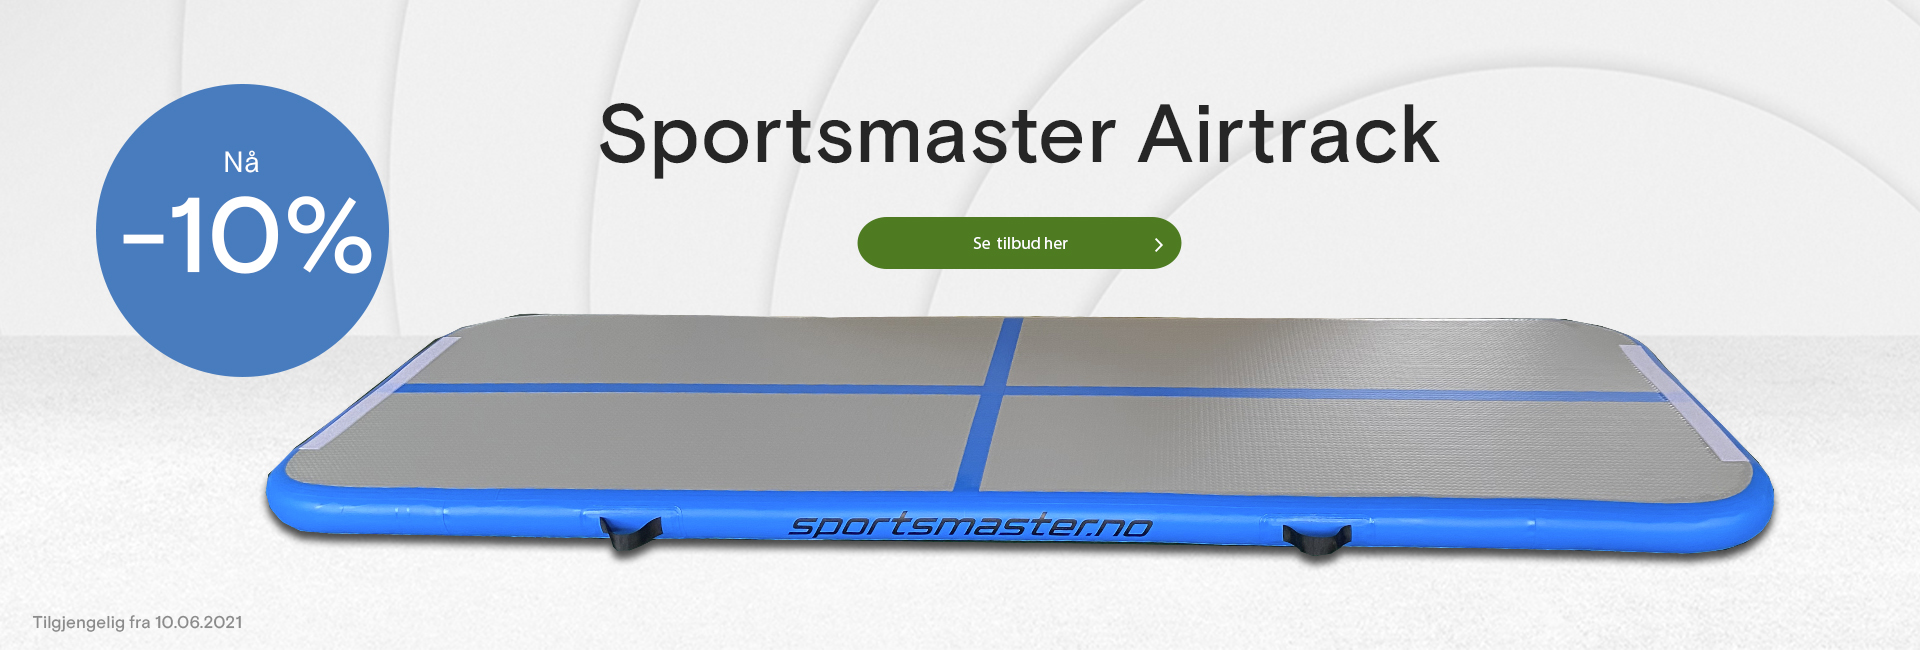 Sportsmaster airtrack